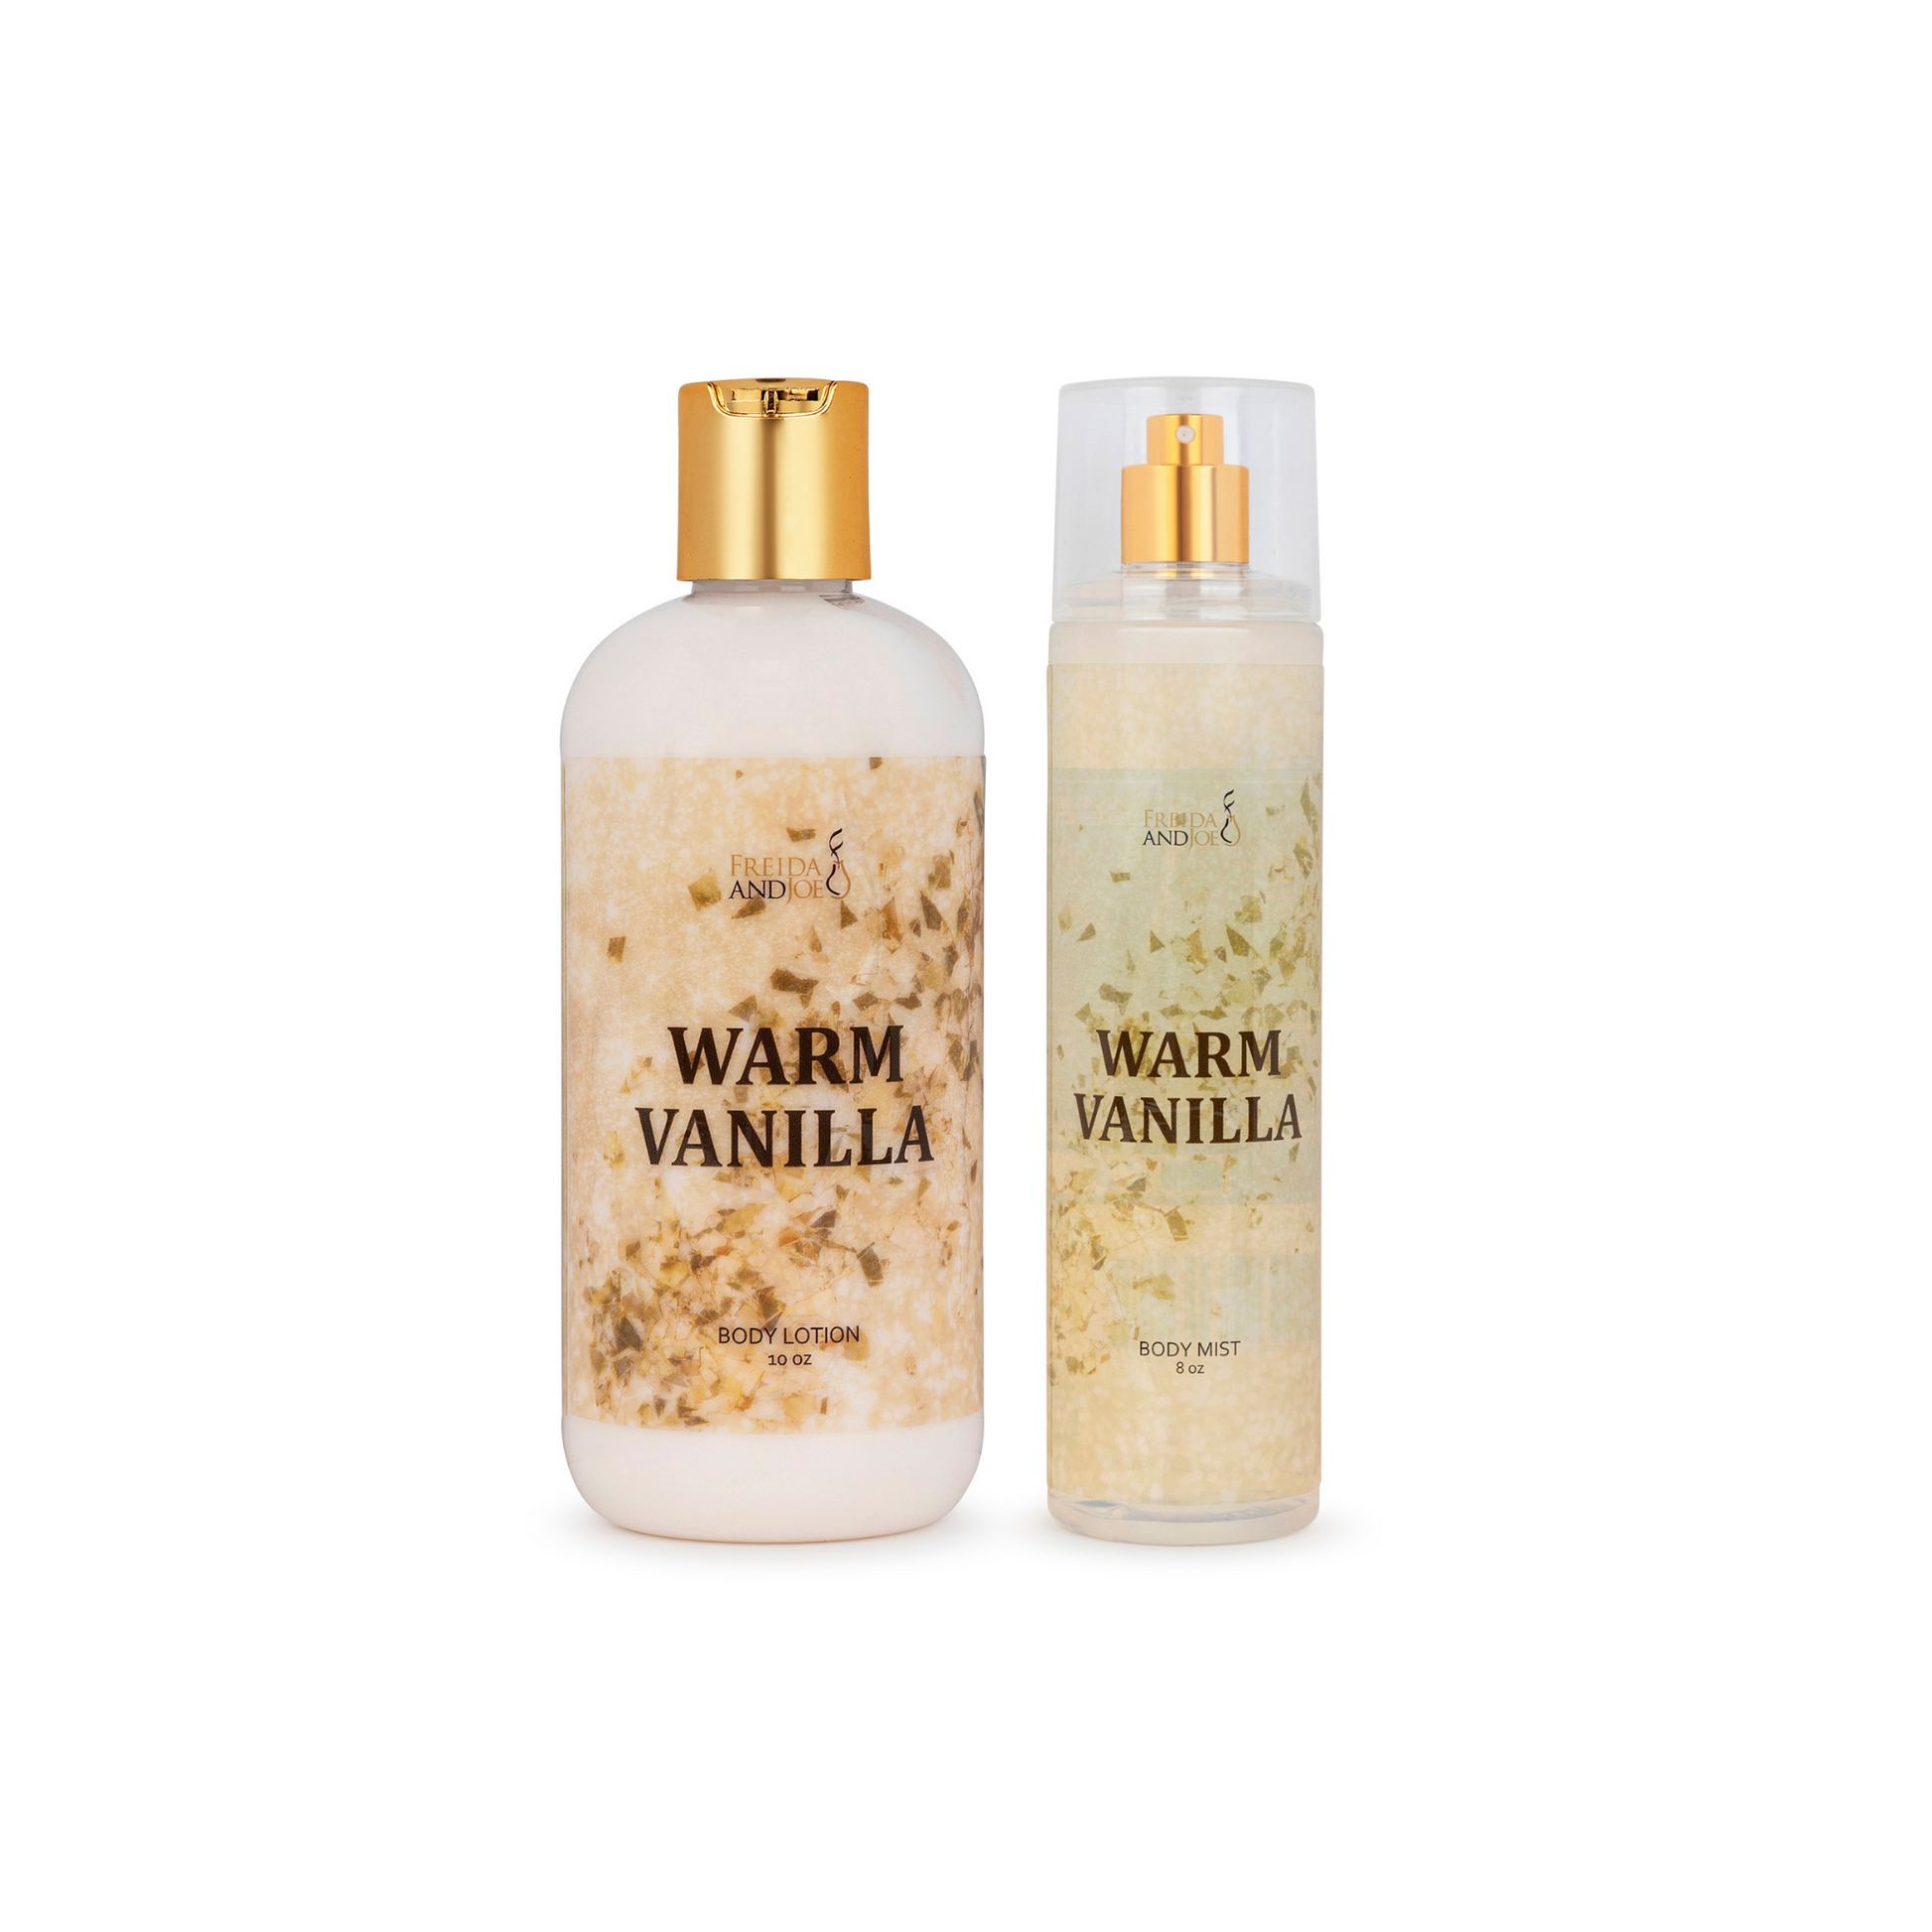 Warm Vanilla Fragrance 10oz Body Lotion and 8oz Body Mist Spray